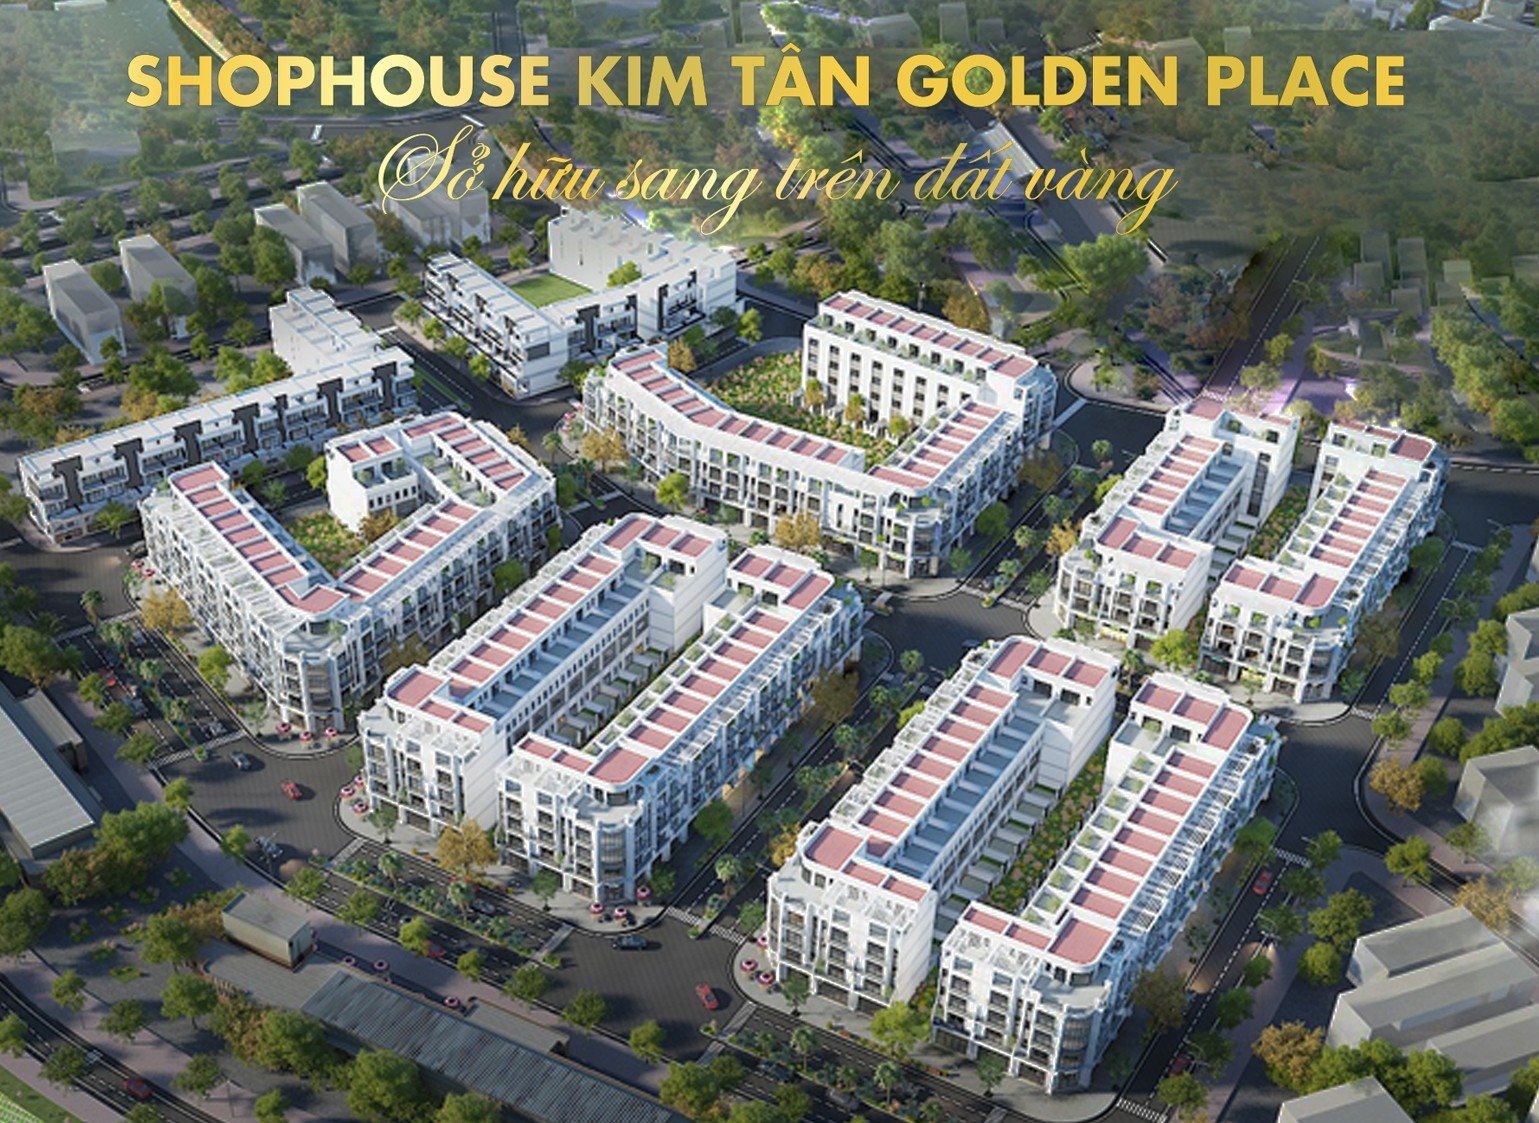 Kim Tân Golden Place